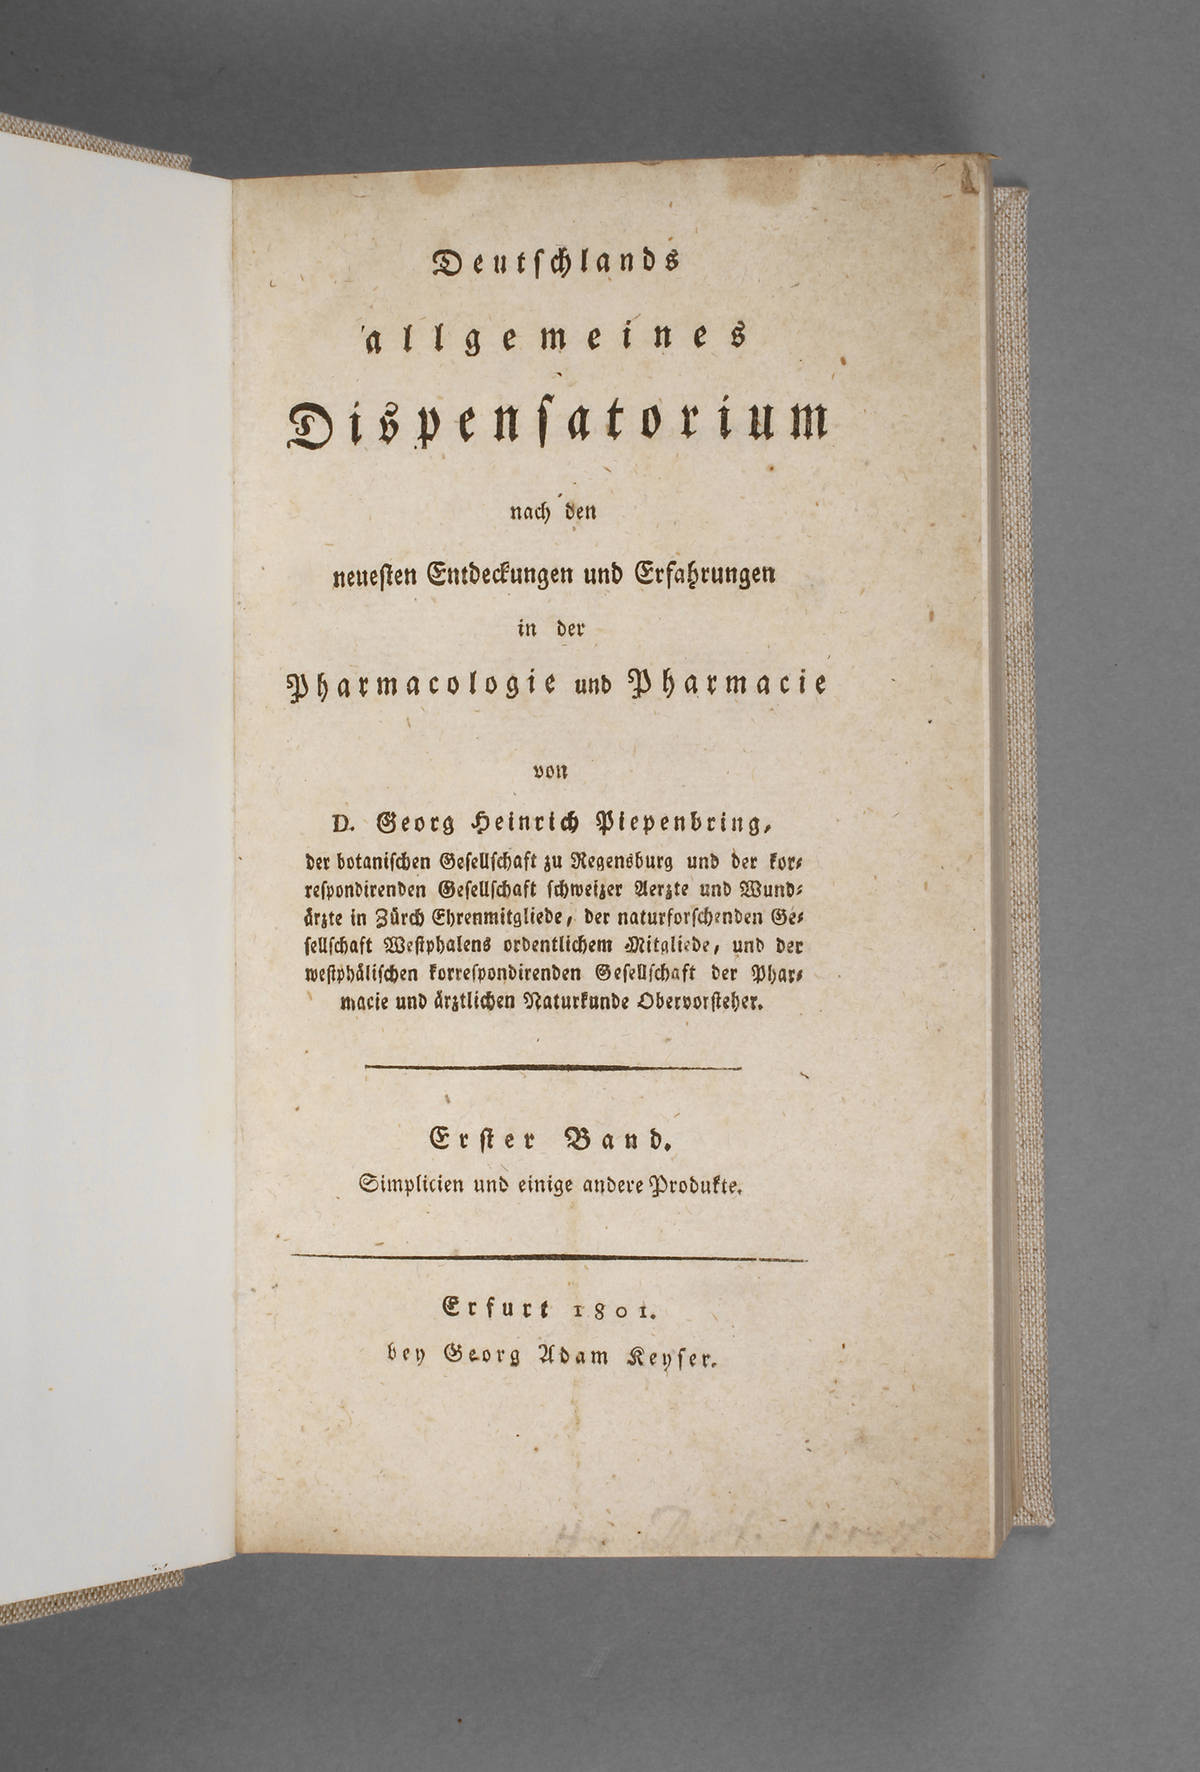 Piepenbrings Arzneibuch 1801